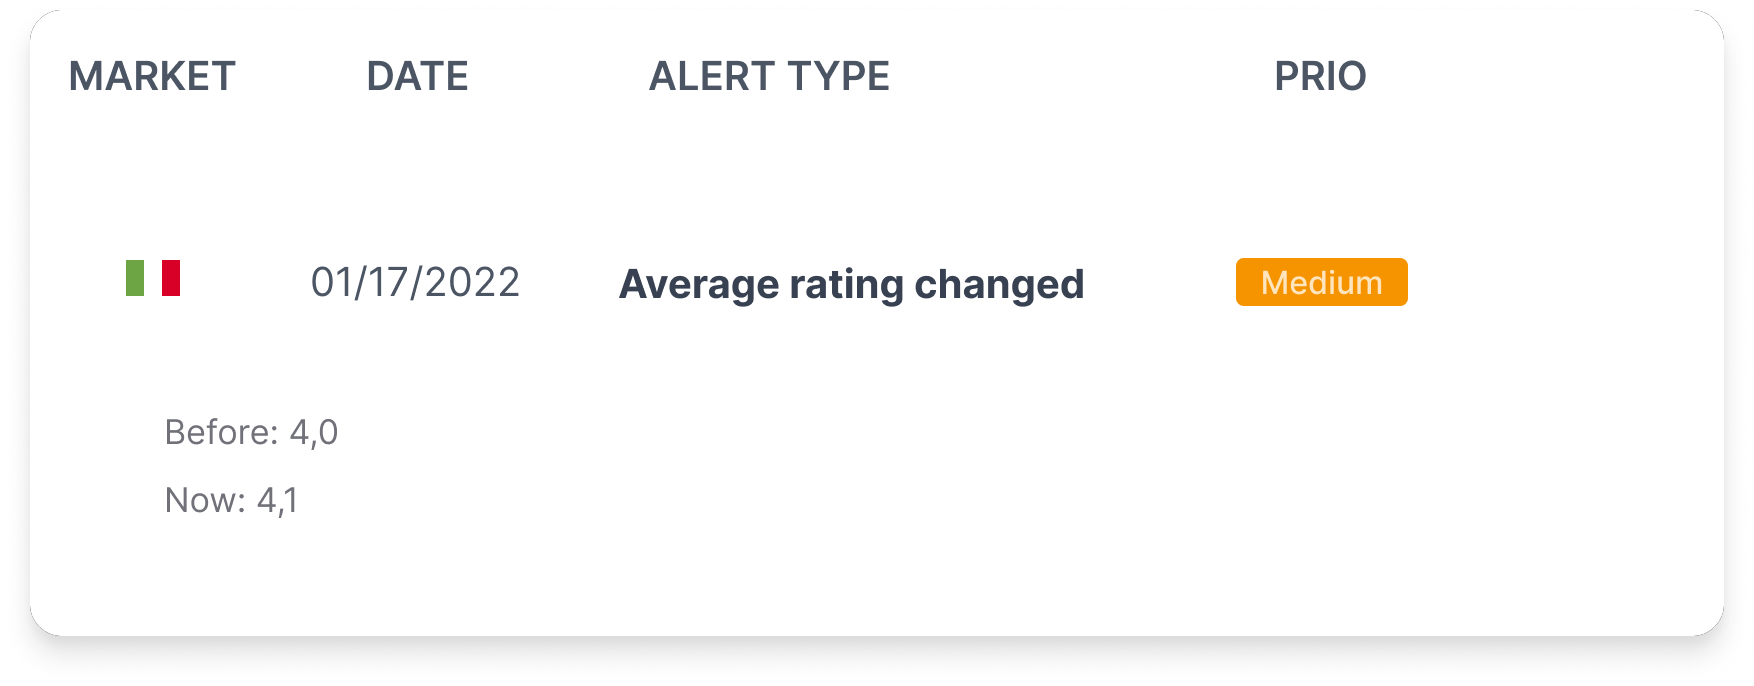 Amazon alert Average rating changed additional information